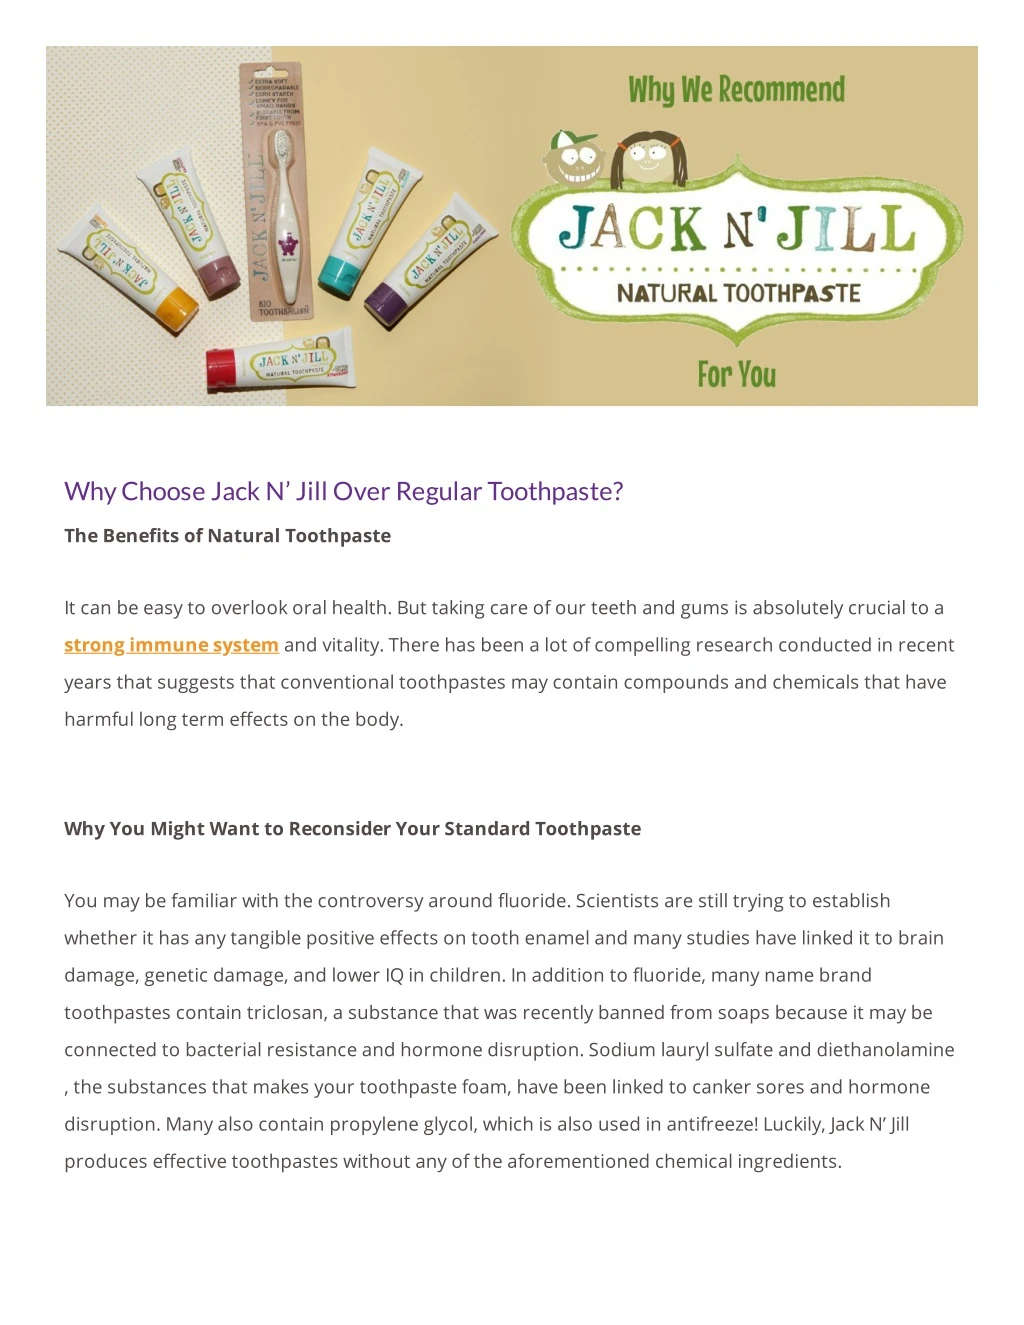 why choose jack n jill over regular toothpaste